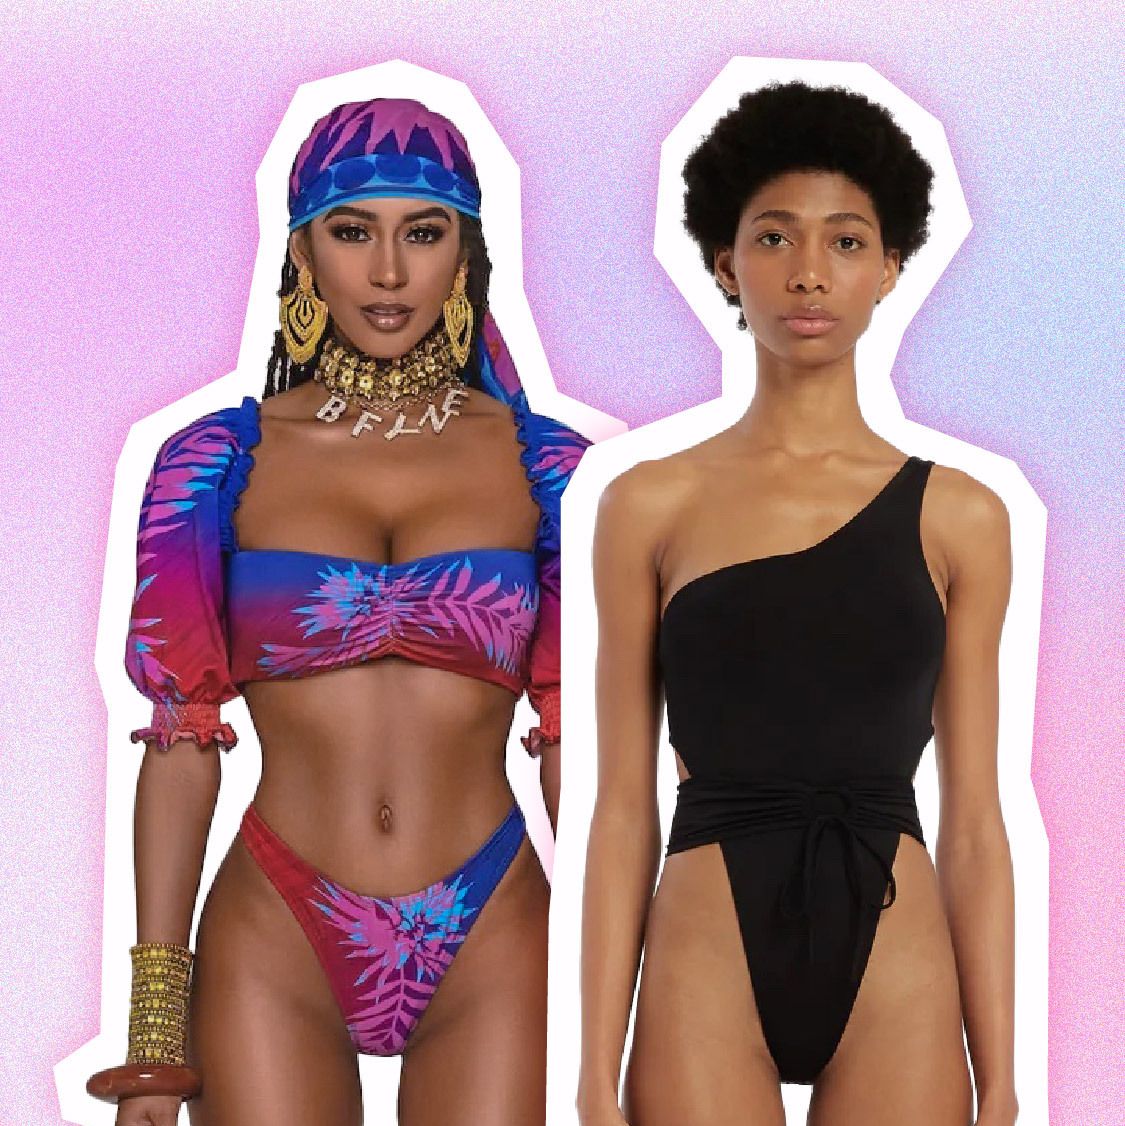 bryan garduque share black women in bathing suits photos